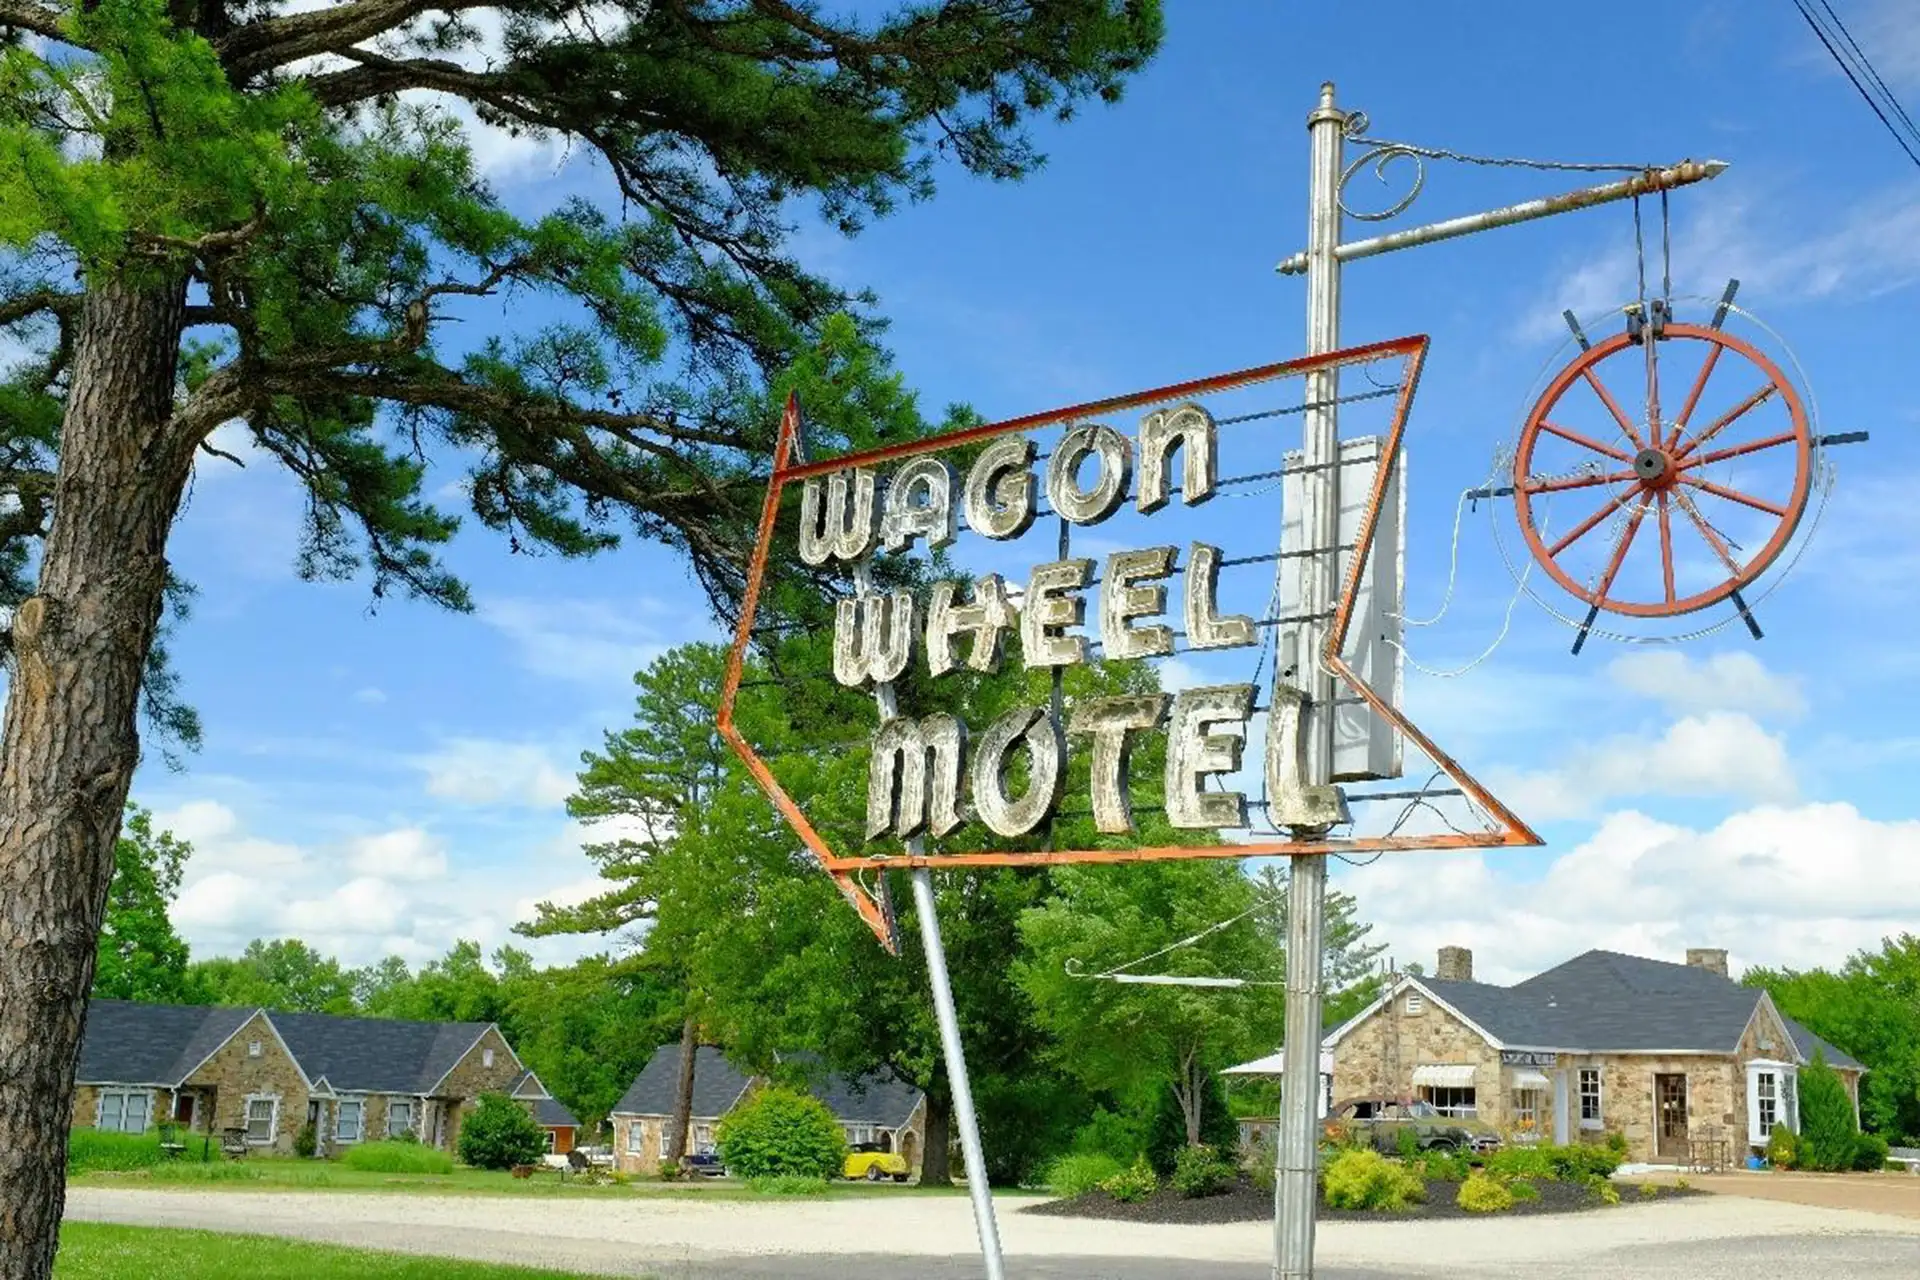 Wagon Wheel Motel; Courtesy of Wagon Wheel Motel